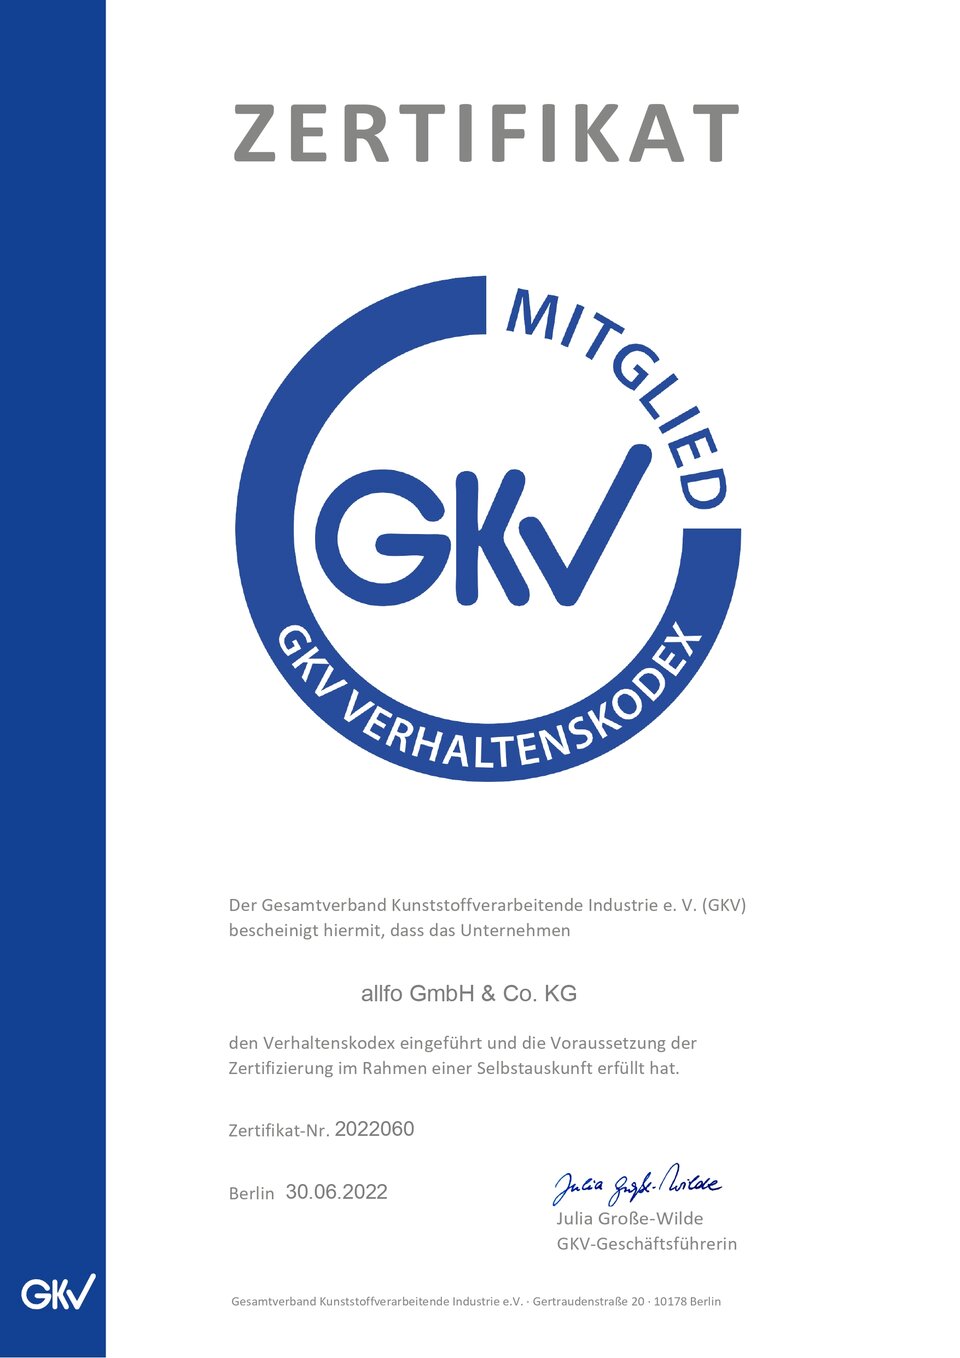 GKV Zertifikat von Allfo, Bildnummer 74500e81a8